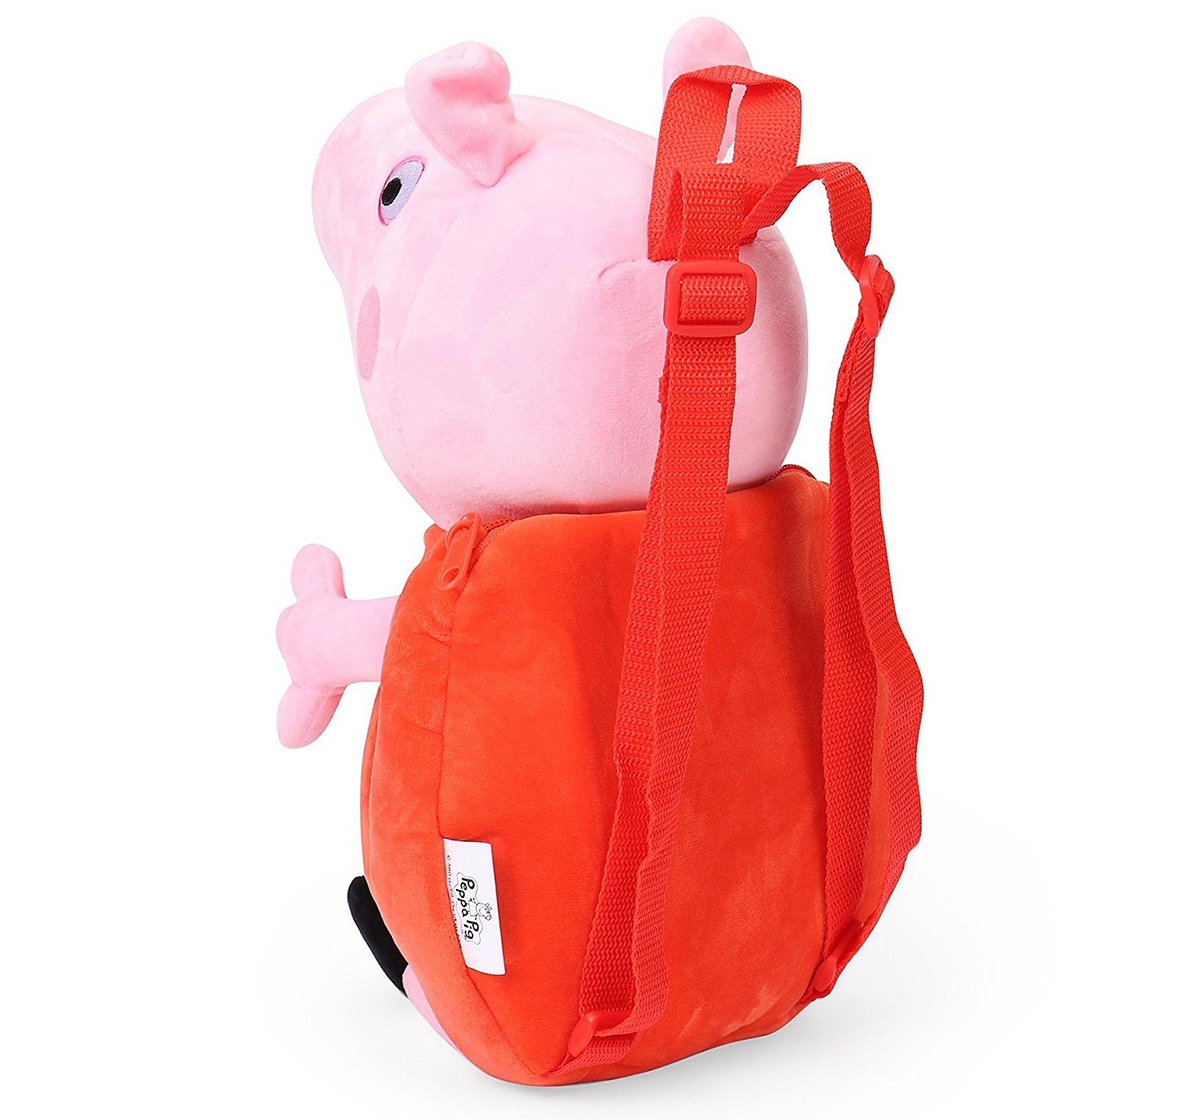 Peppa Pig | Peppa Pig Soft Toy Bag Multi Color 44 Cm for Kids age 2Y+ 3